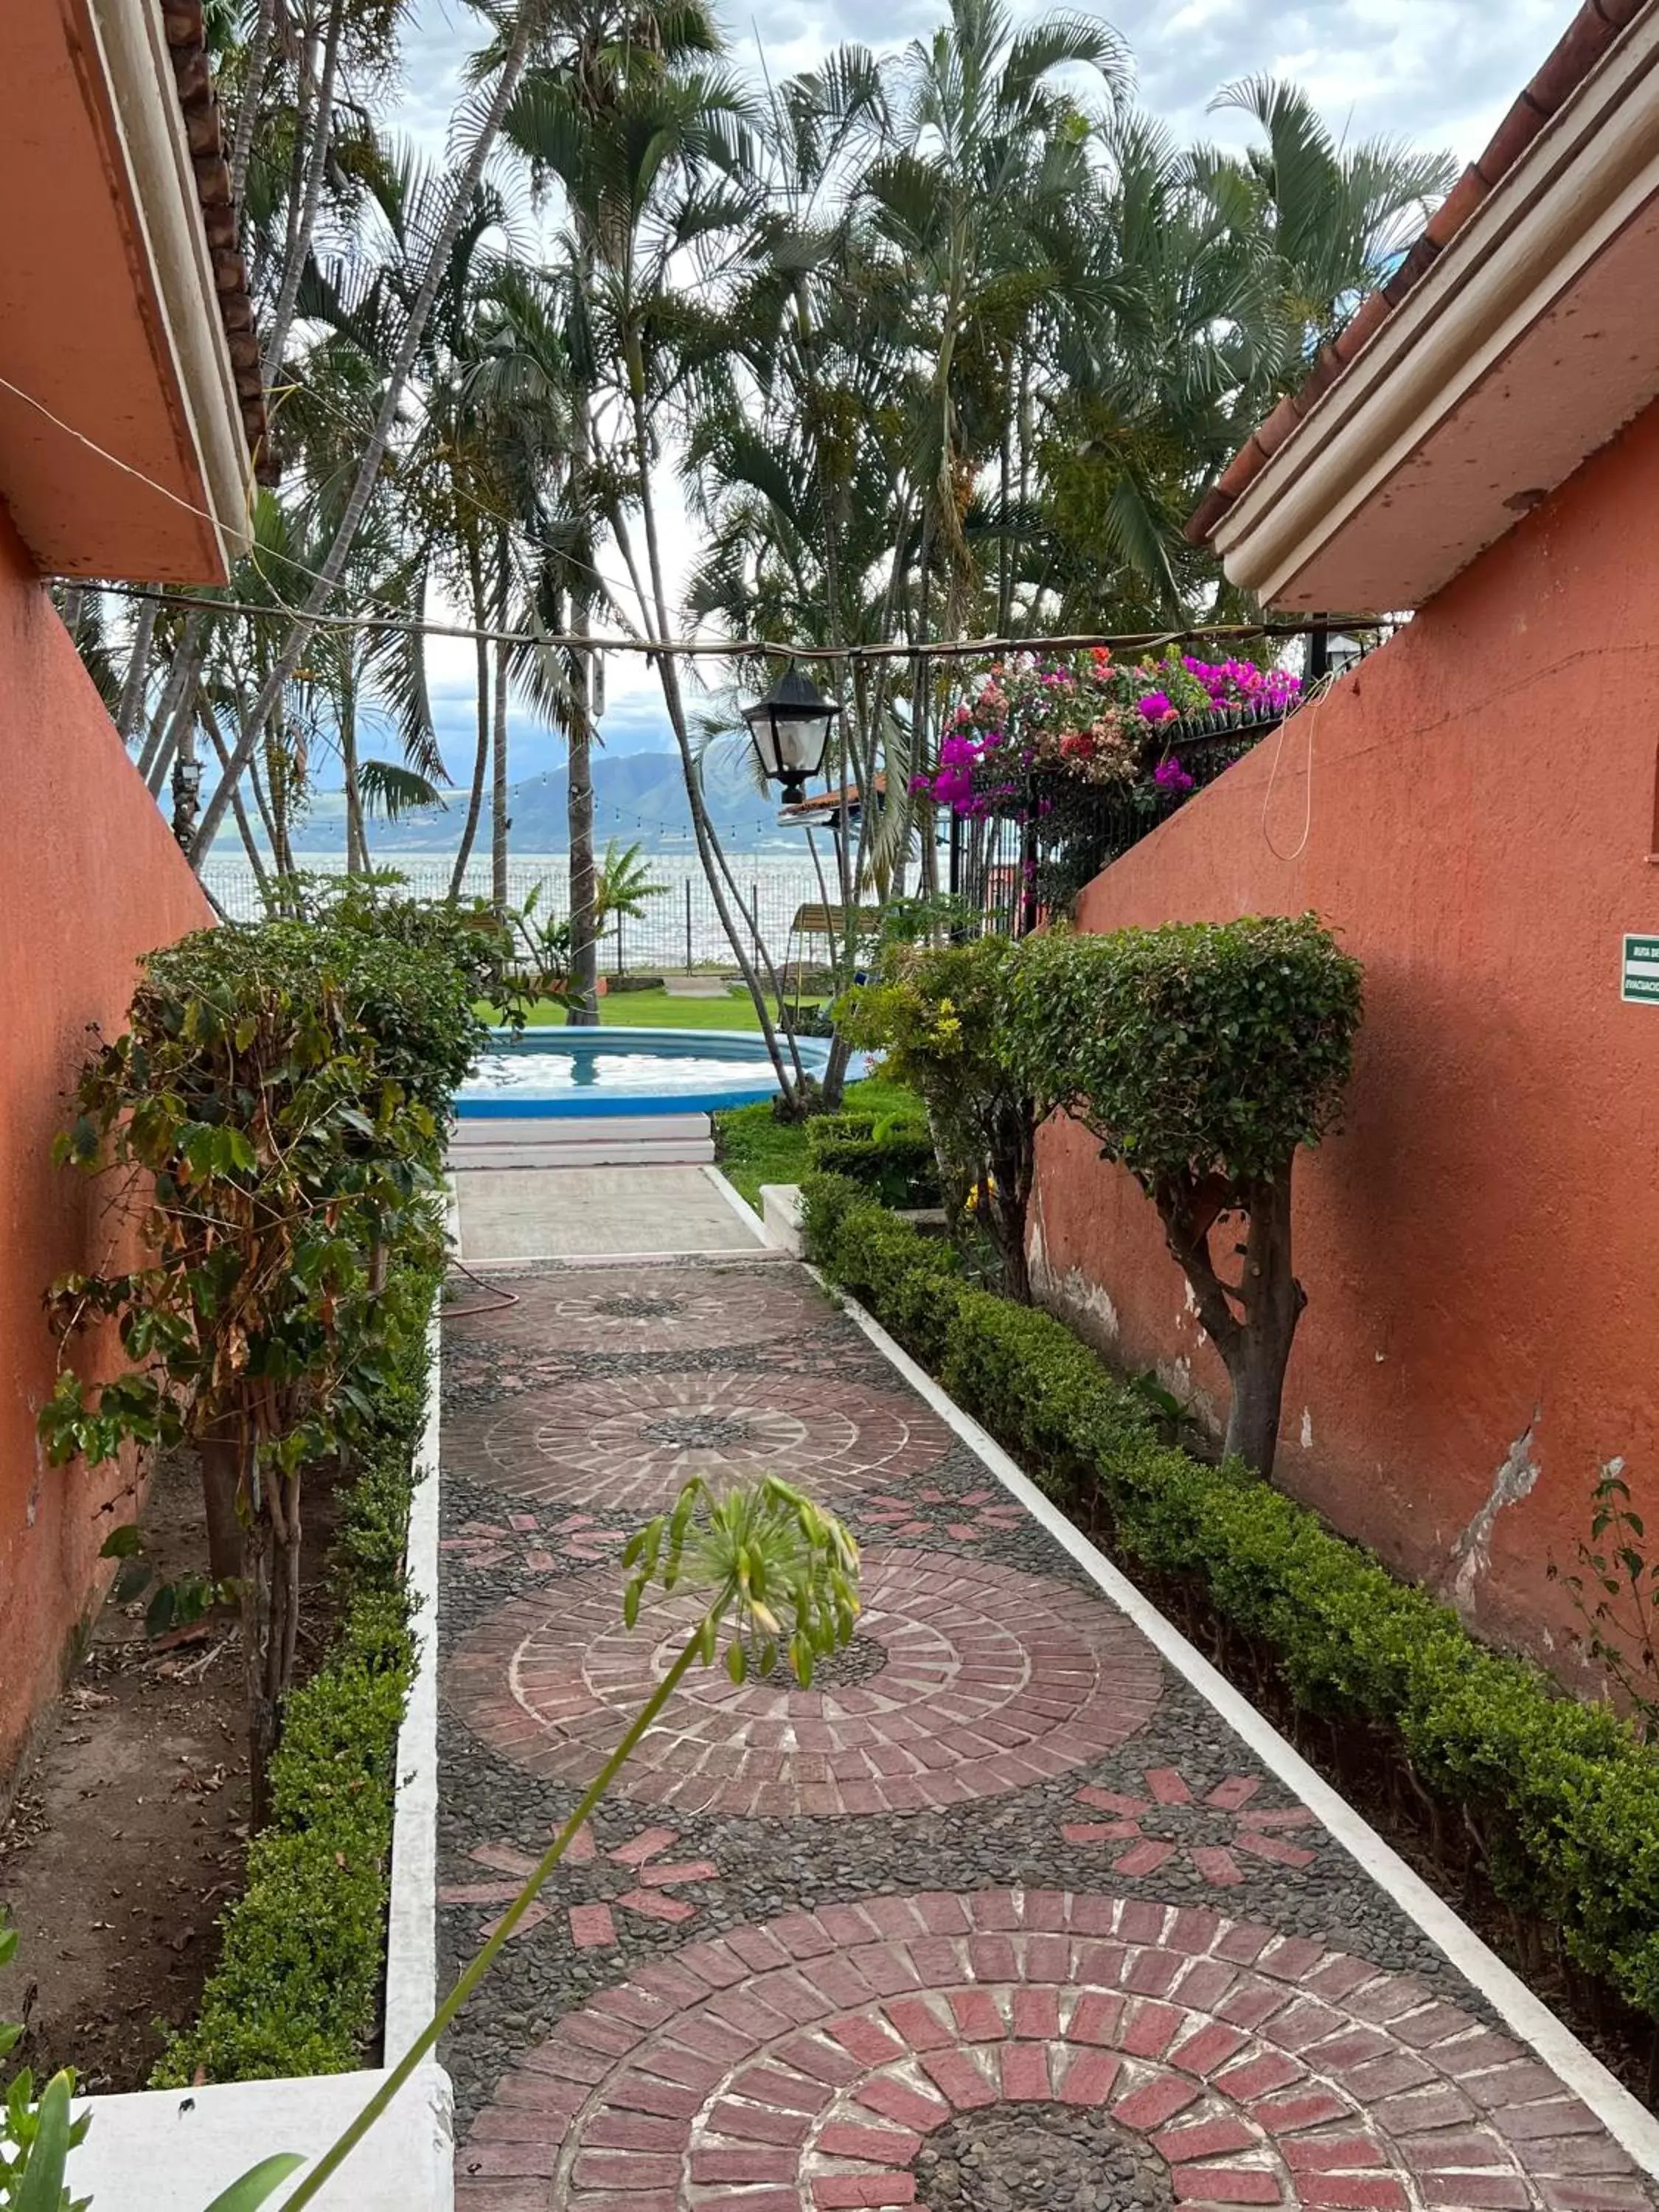 Swimming pool, Pool View in Hotel Villas Ajijic, Ajijic Chapala Jalisco